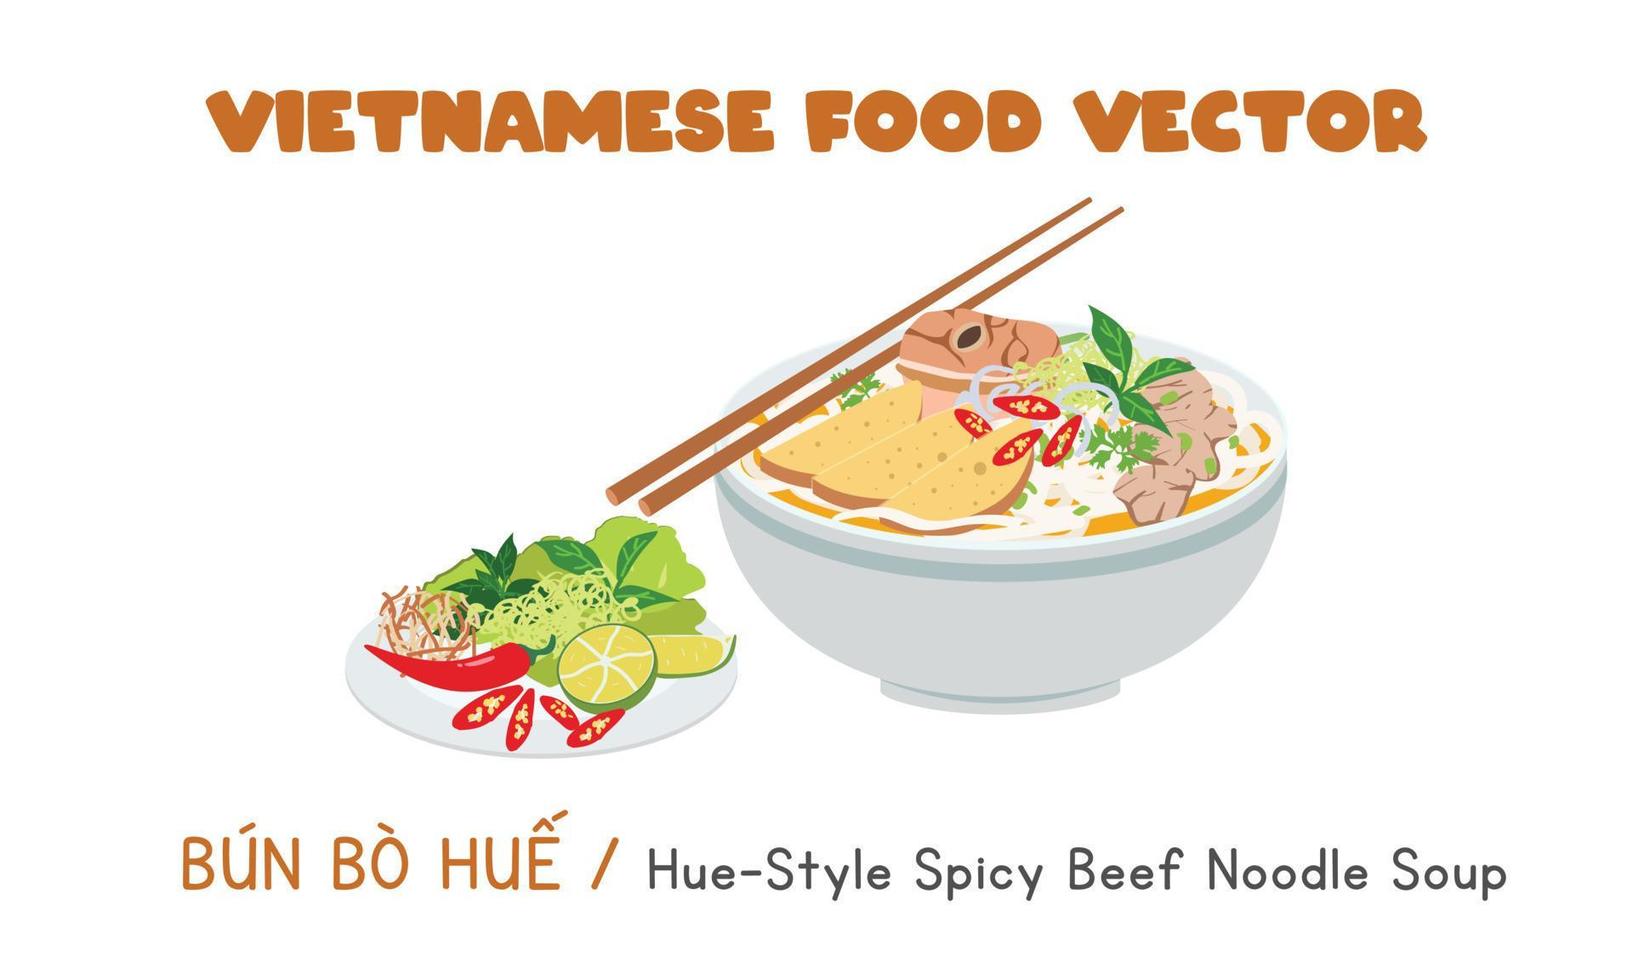 Vietnamese Hue style spicy beef noodle soup flat vector design. Bun Bo Hue Vietnam clipart cartoon style. Asian food. Vietnamese cuisine. Vietnam food